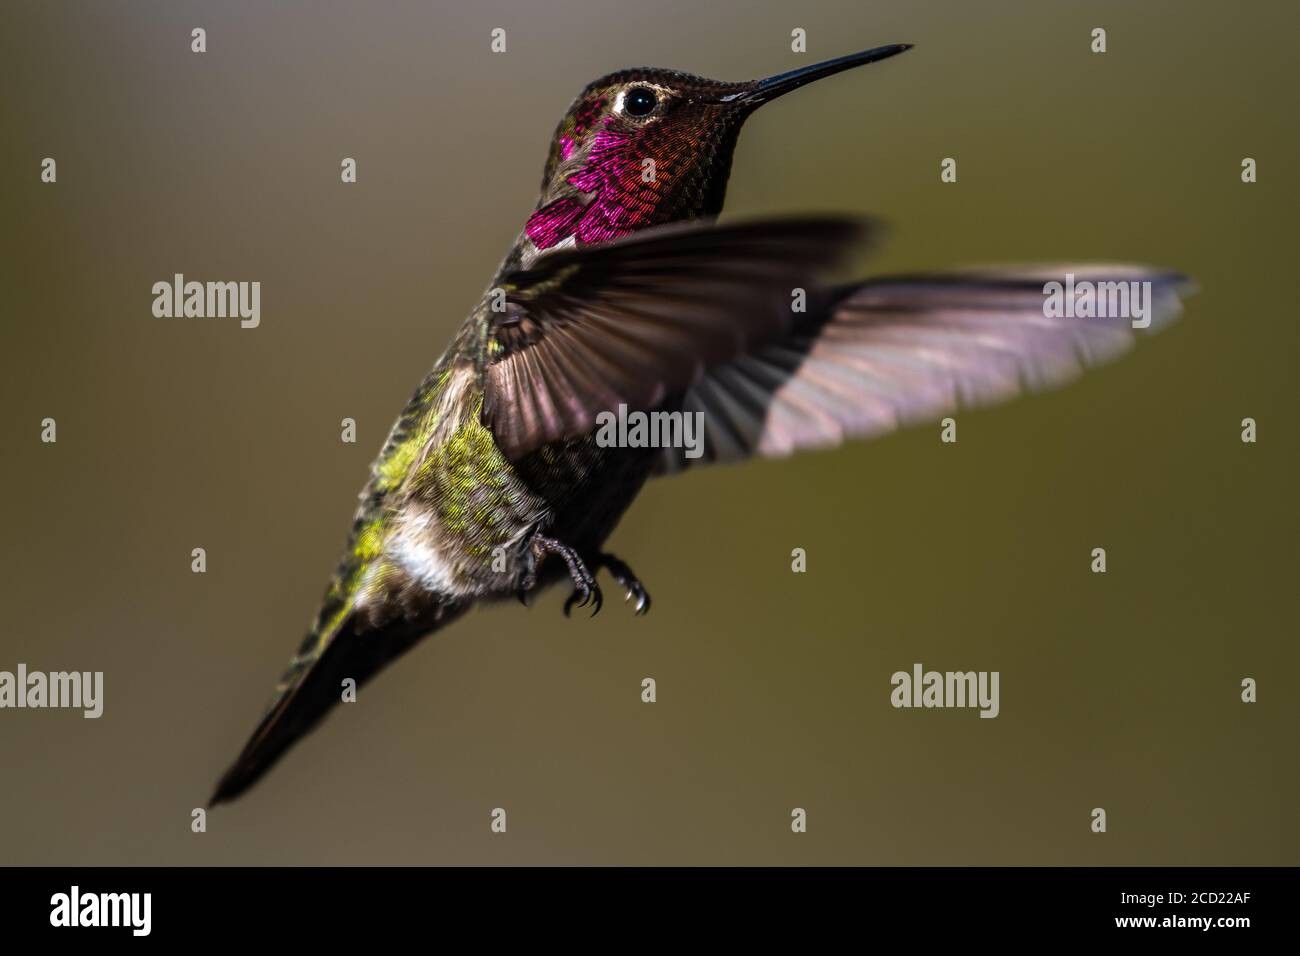 Hummingbird flying, flapping its wings in flight. Oregon, Ashland, Cascade Siskiyou National Monument, Winter Stock Photo